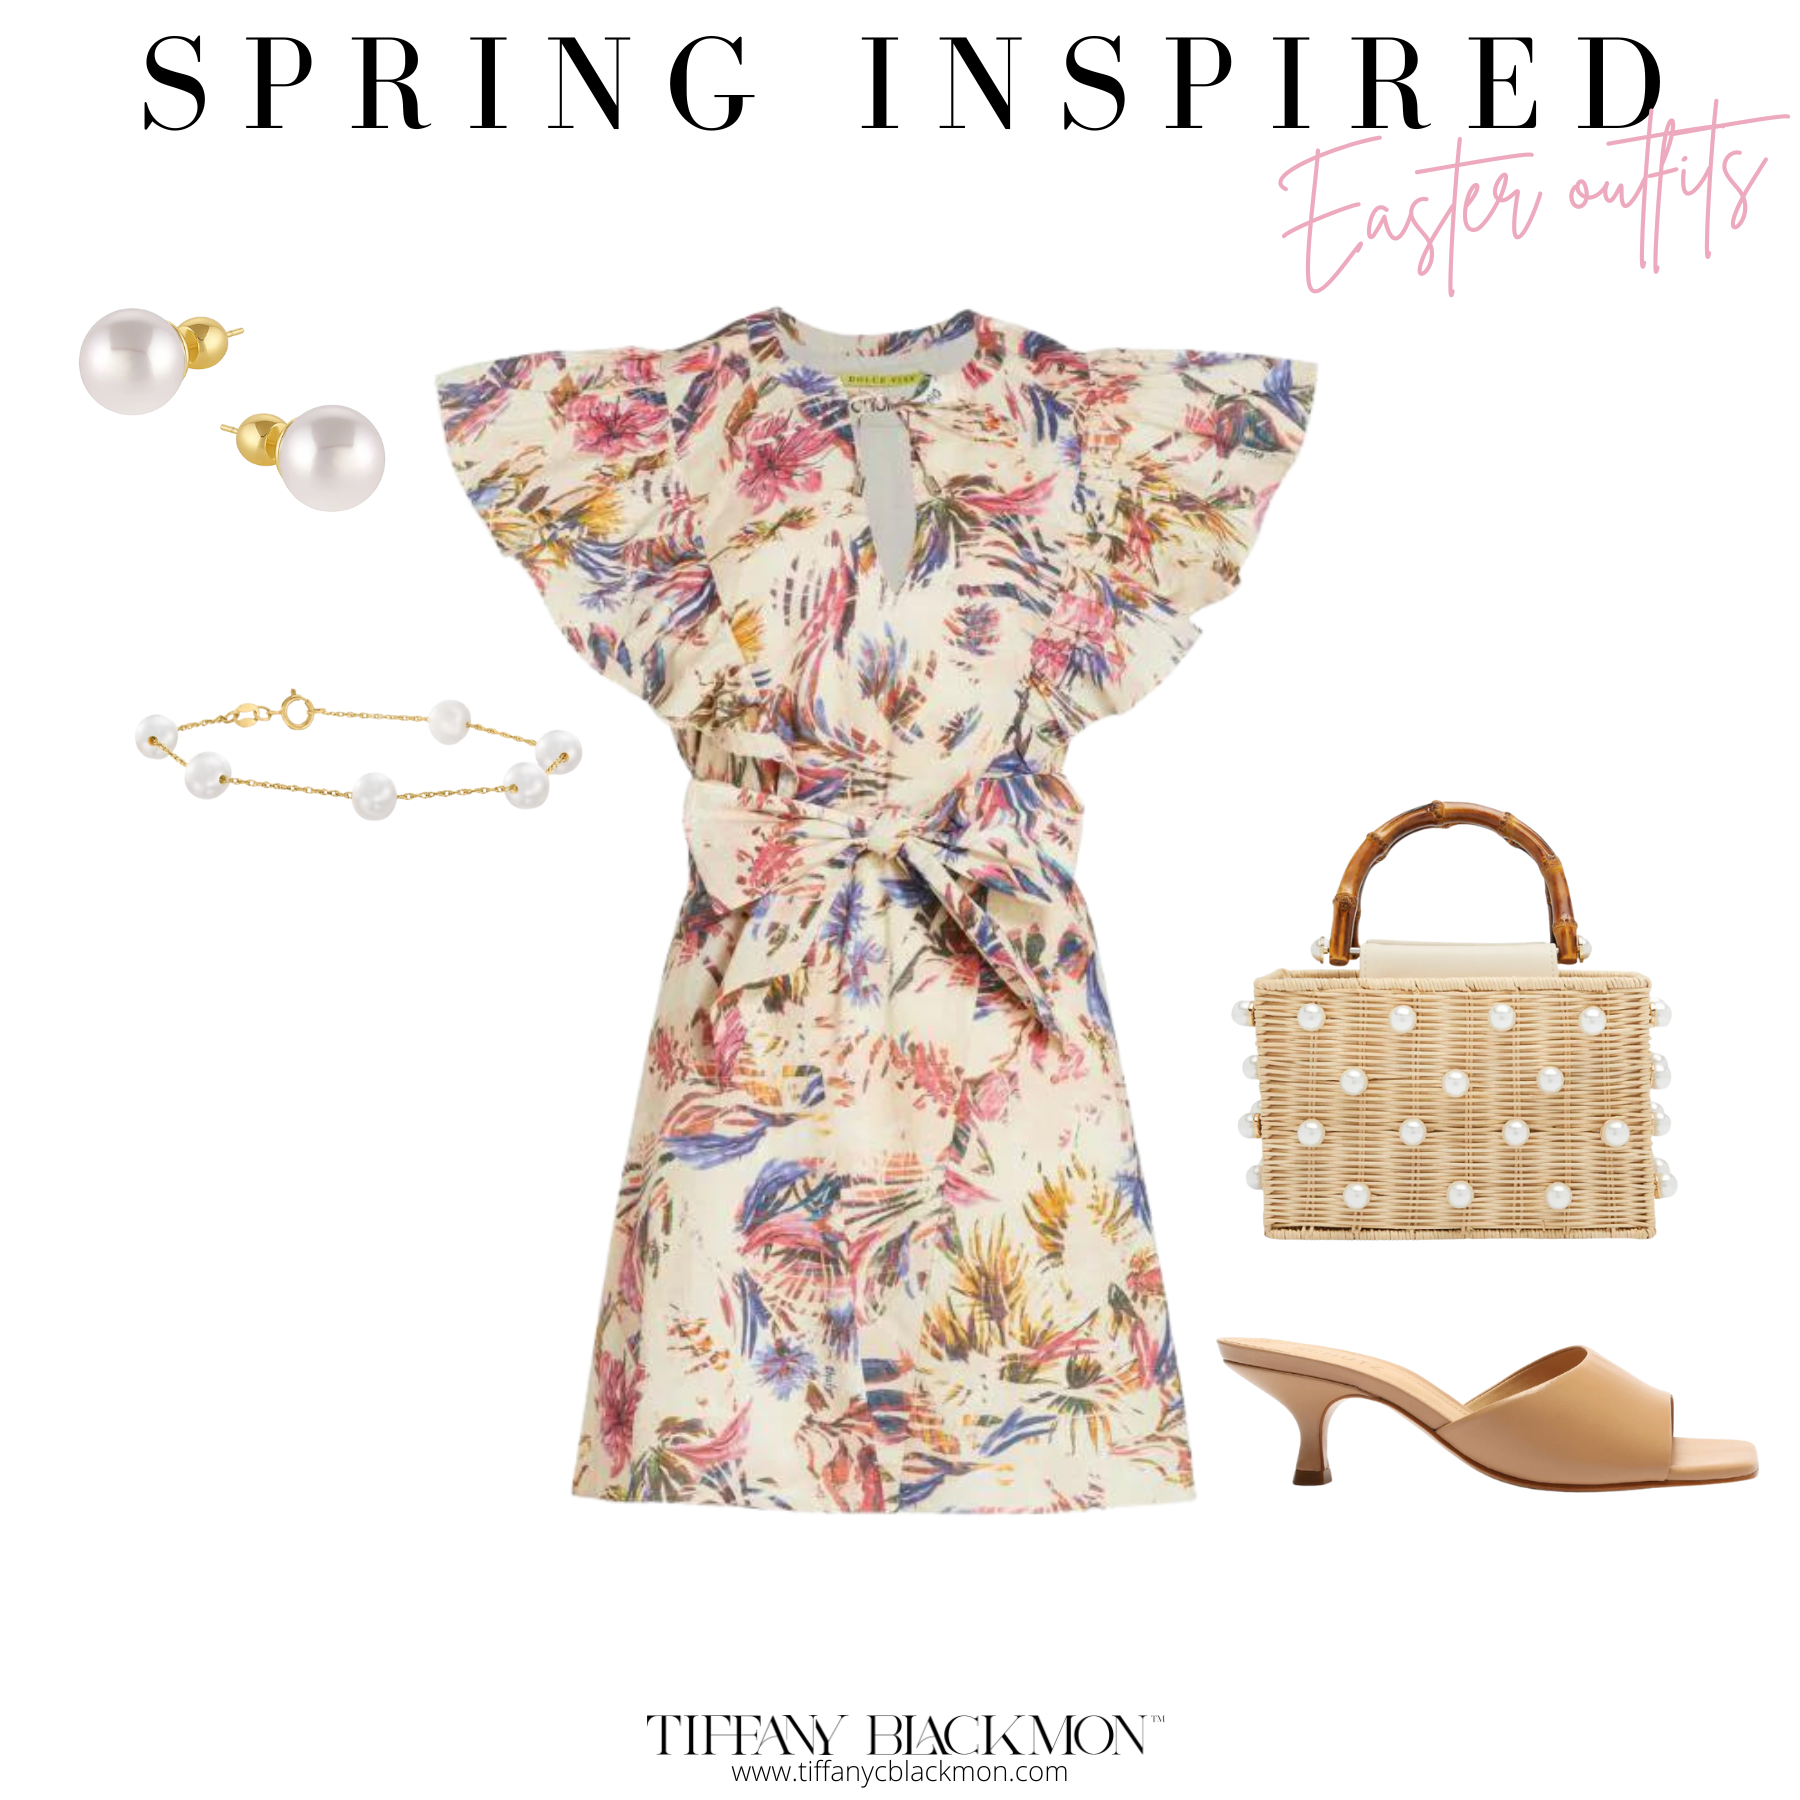 Easter Fashion
#springoutfits #spirngfashion #Easter #Easterfashion #florals #dress #specialoccassion #fashion #fashioninspo 